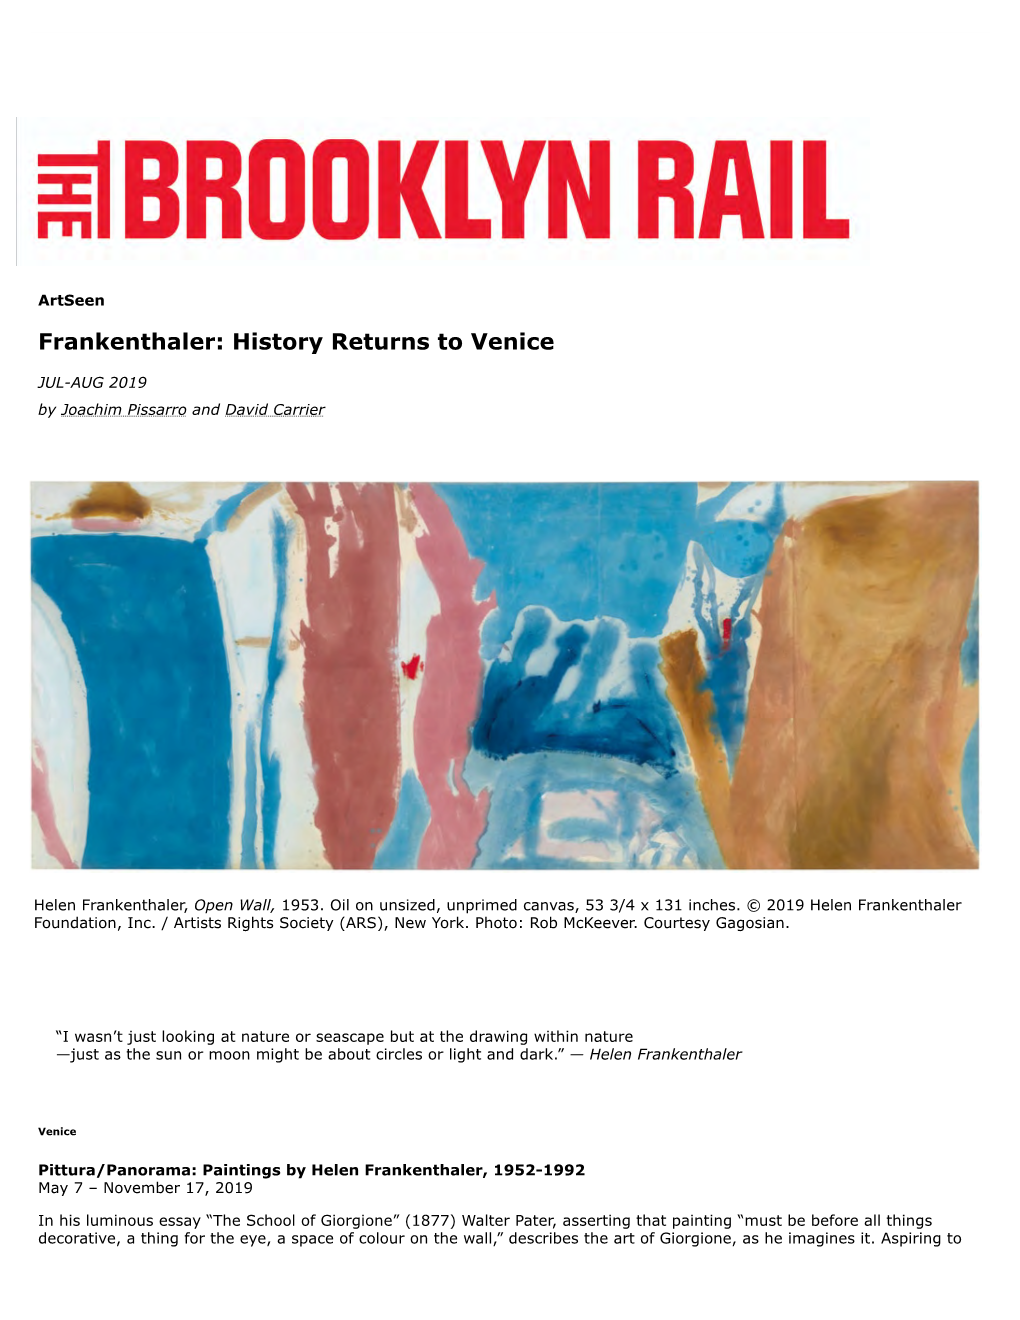 History Returns to Venice – the Brooklyn Rail